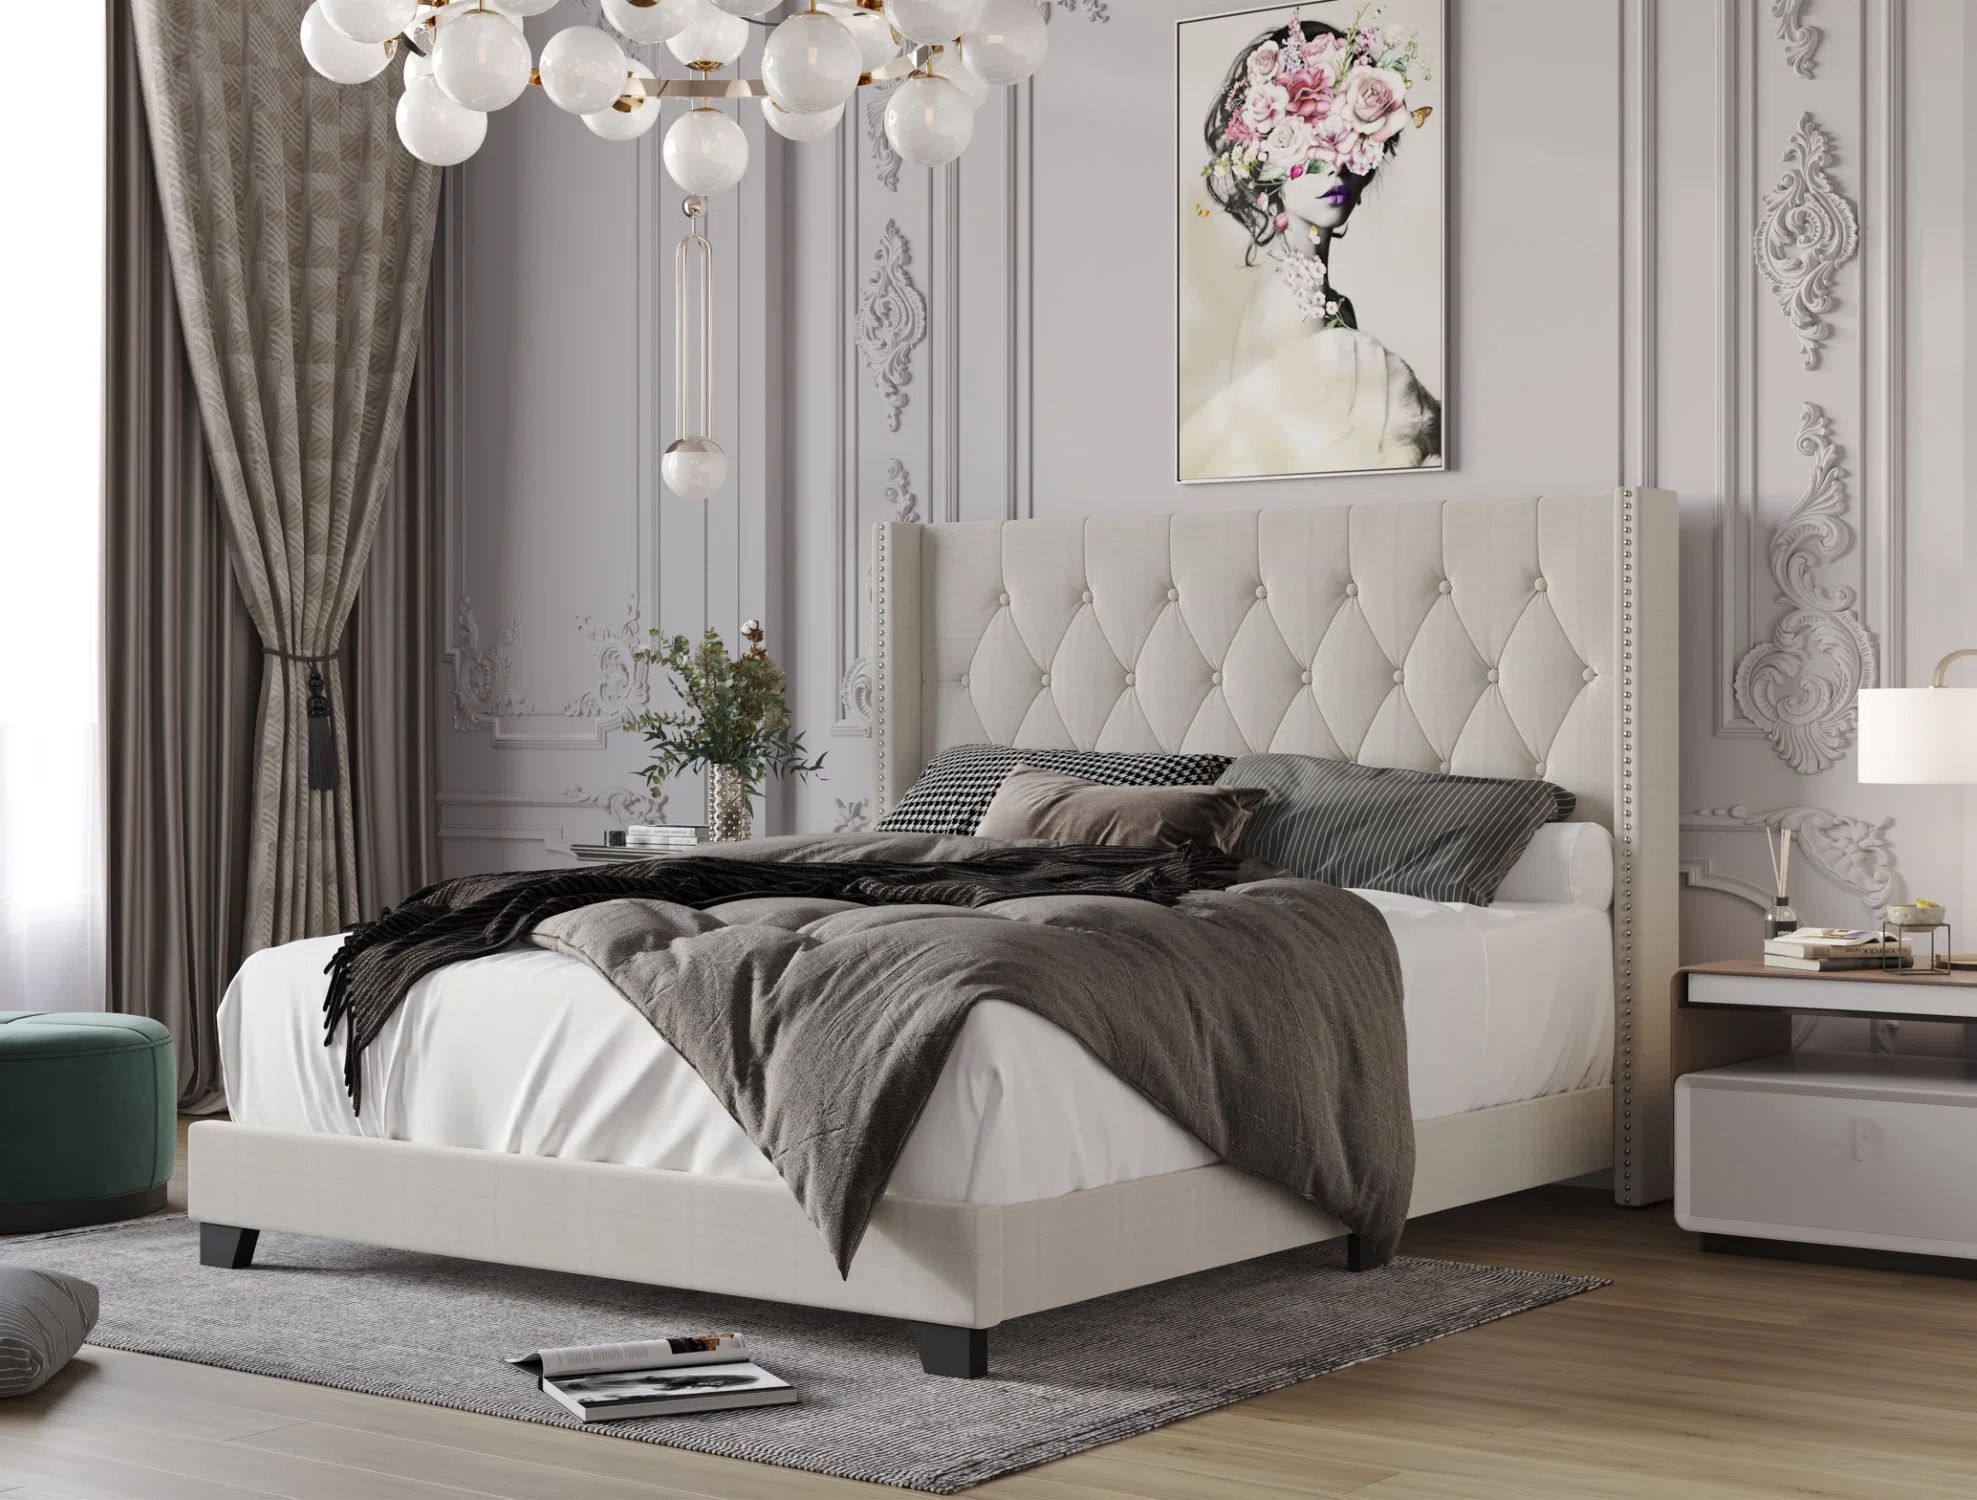 Aadvik Tufted Upholstered Low Profile Standard Bed | Wayfair North America